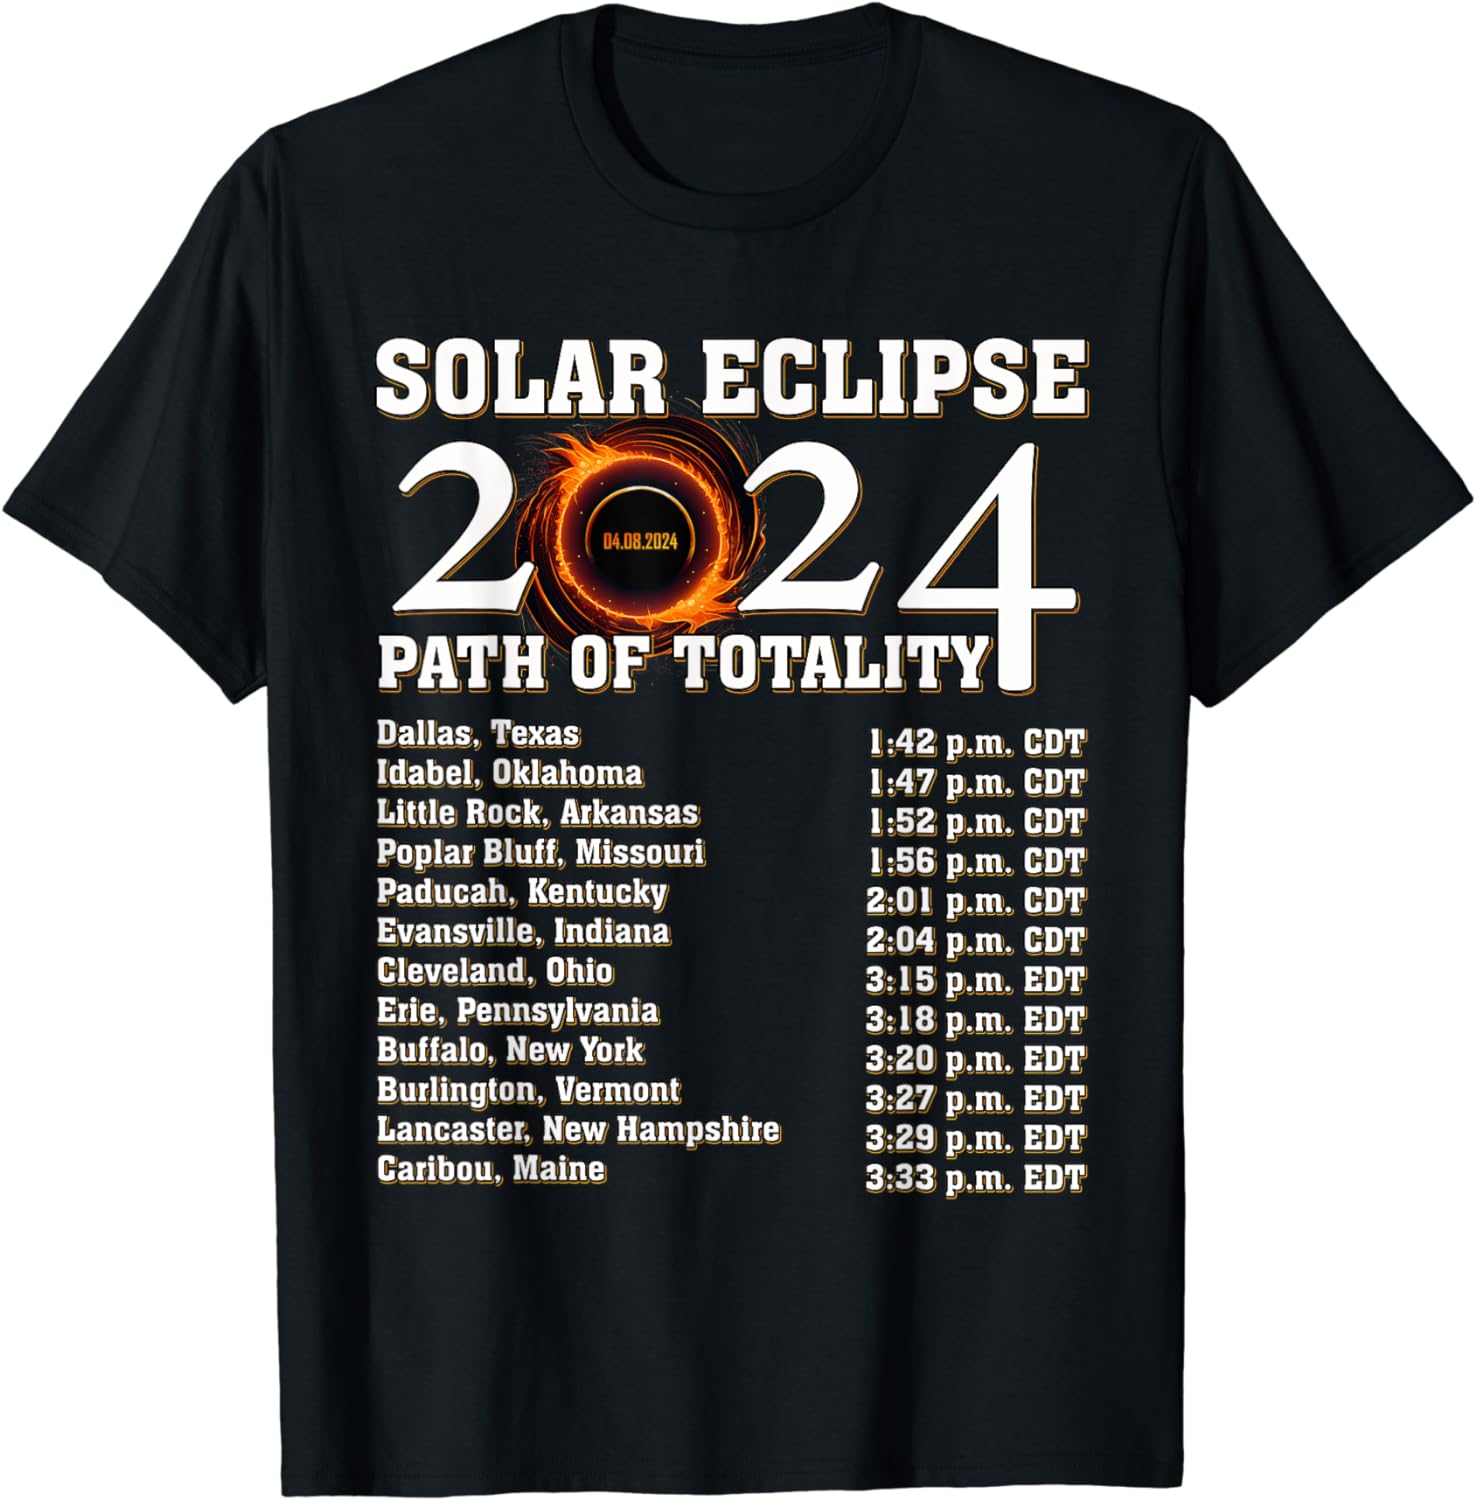 2024 Total Solar Eclipse Path 04.08.24 T-Shirt - Buy t-shirt designs